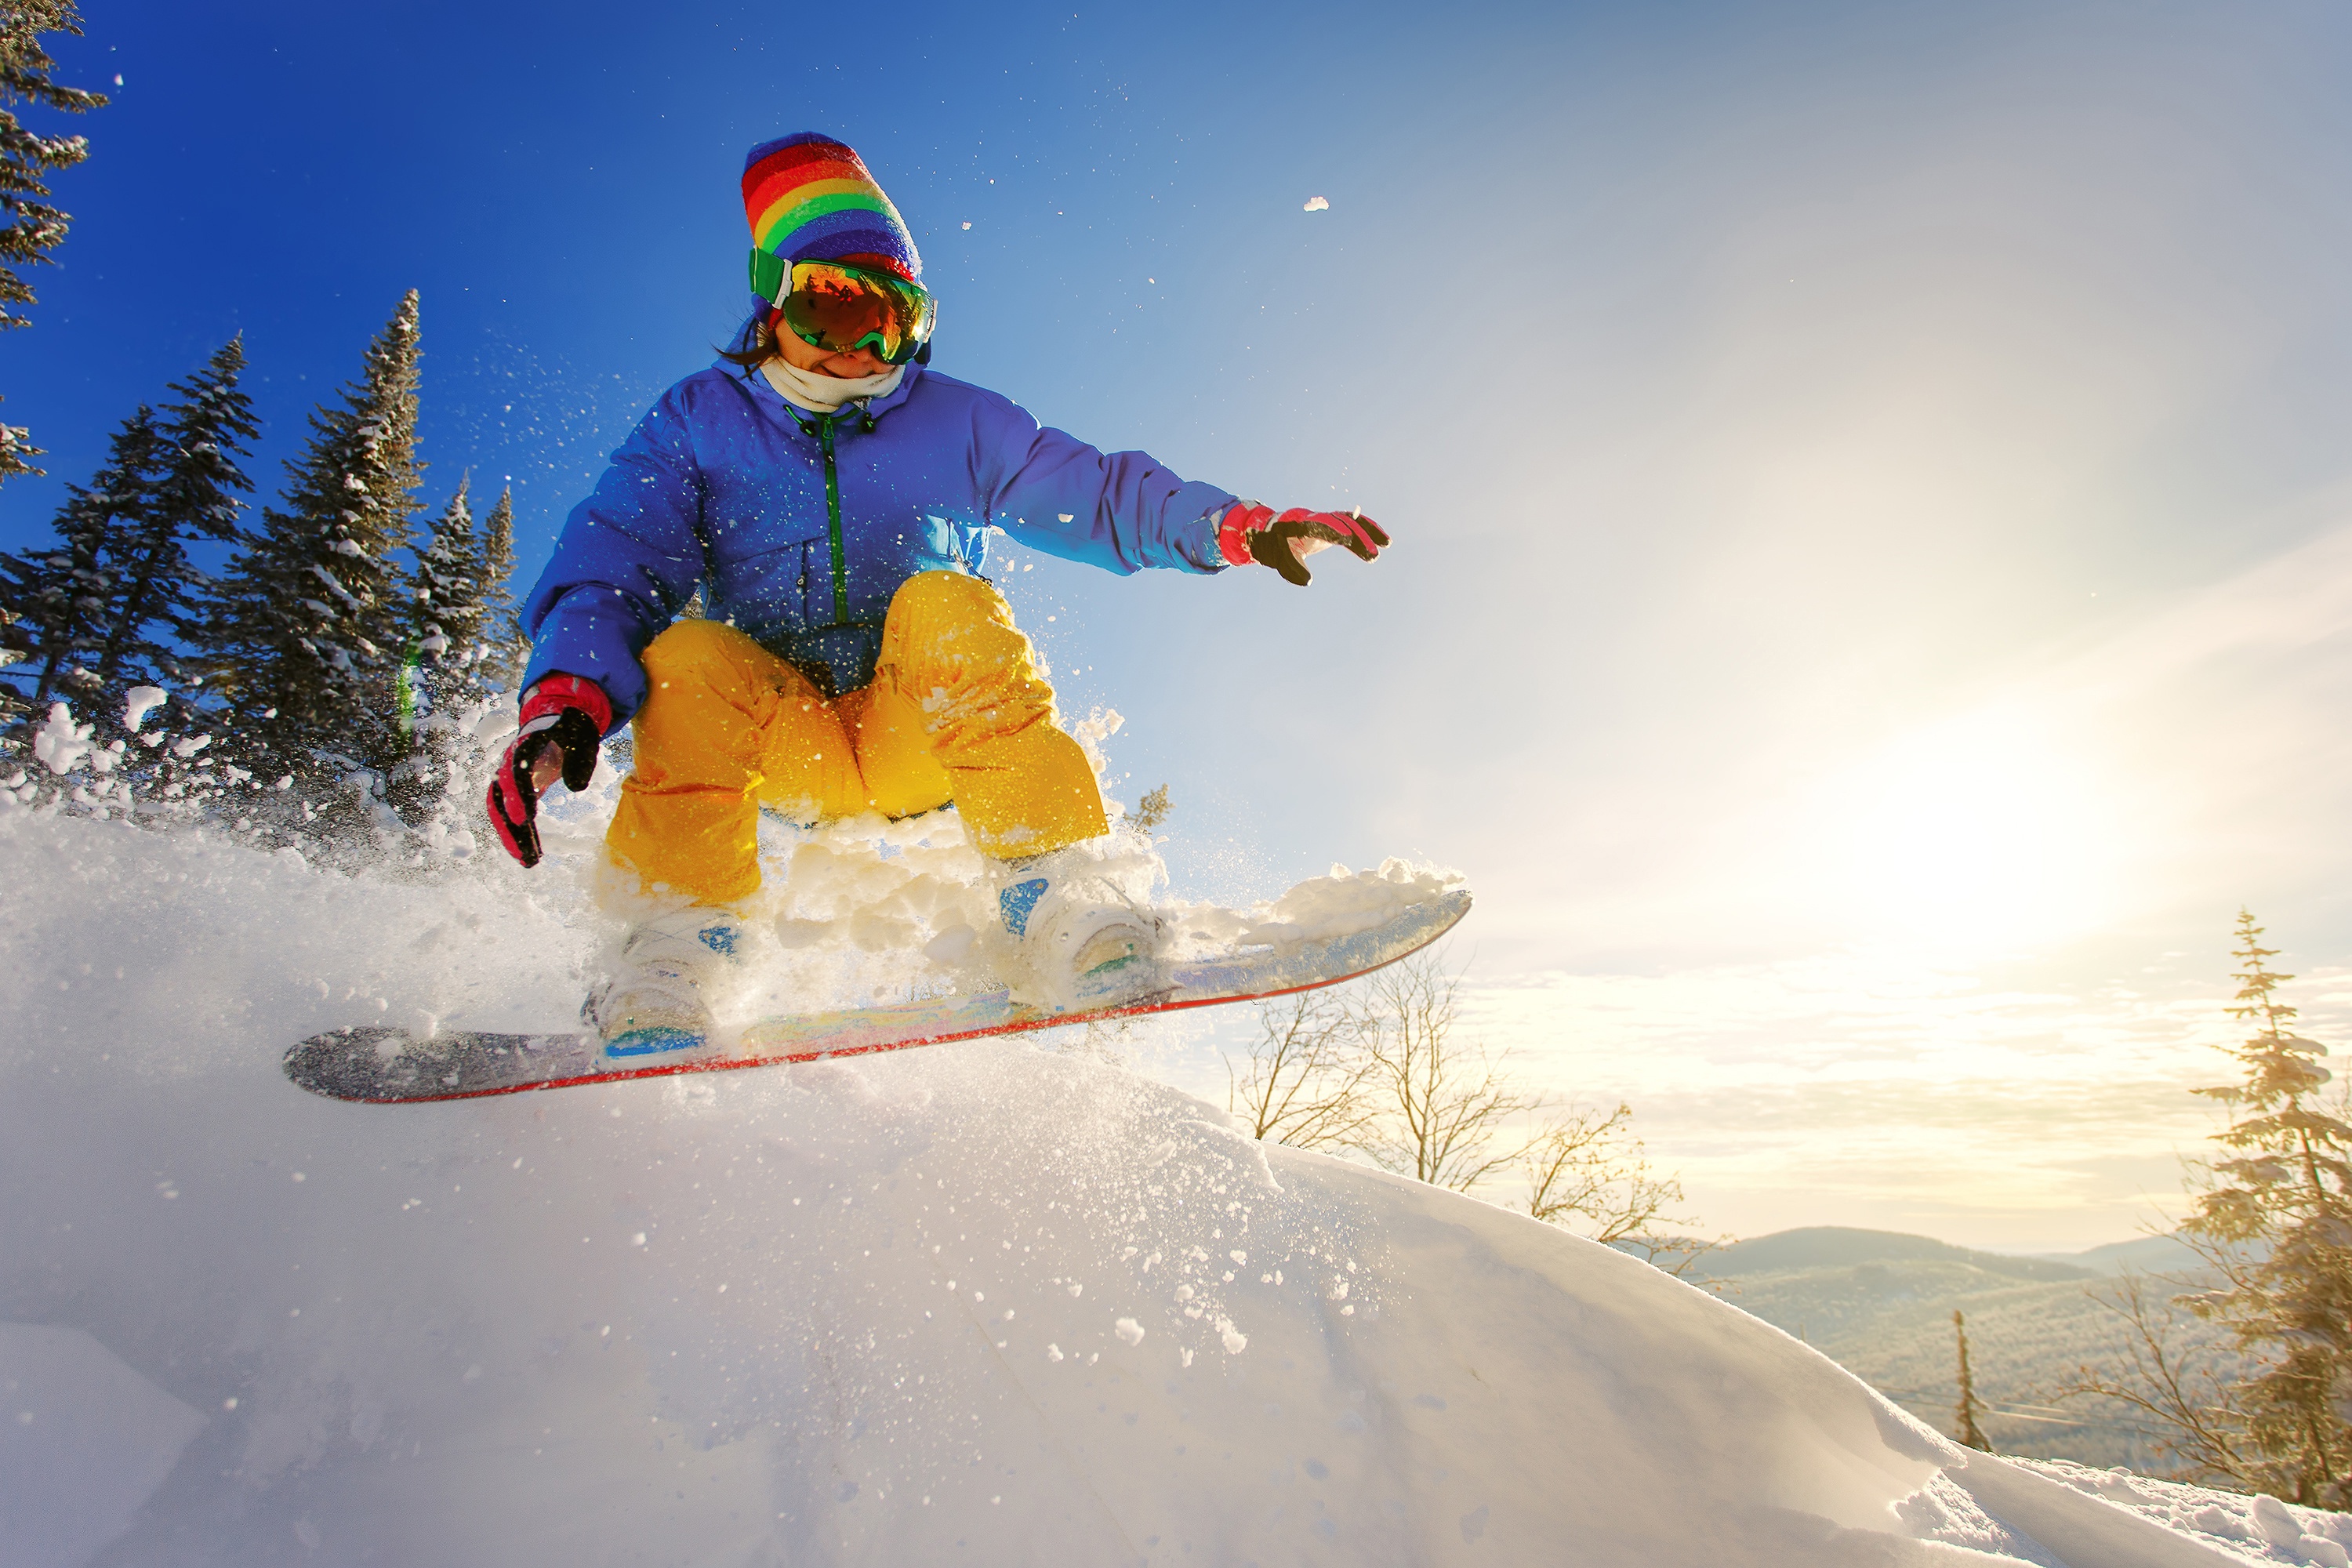 Go snowboarding. Сноубординг. Кататься на сноуборде. Зимний спорт. Горы сноуборд.